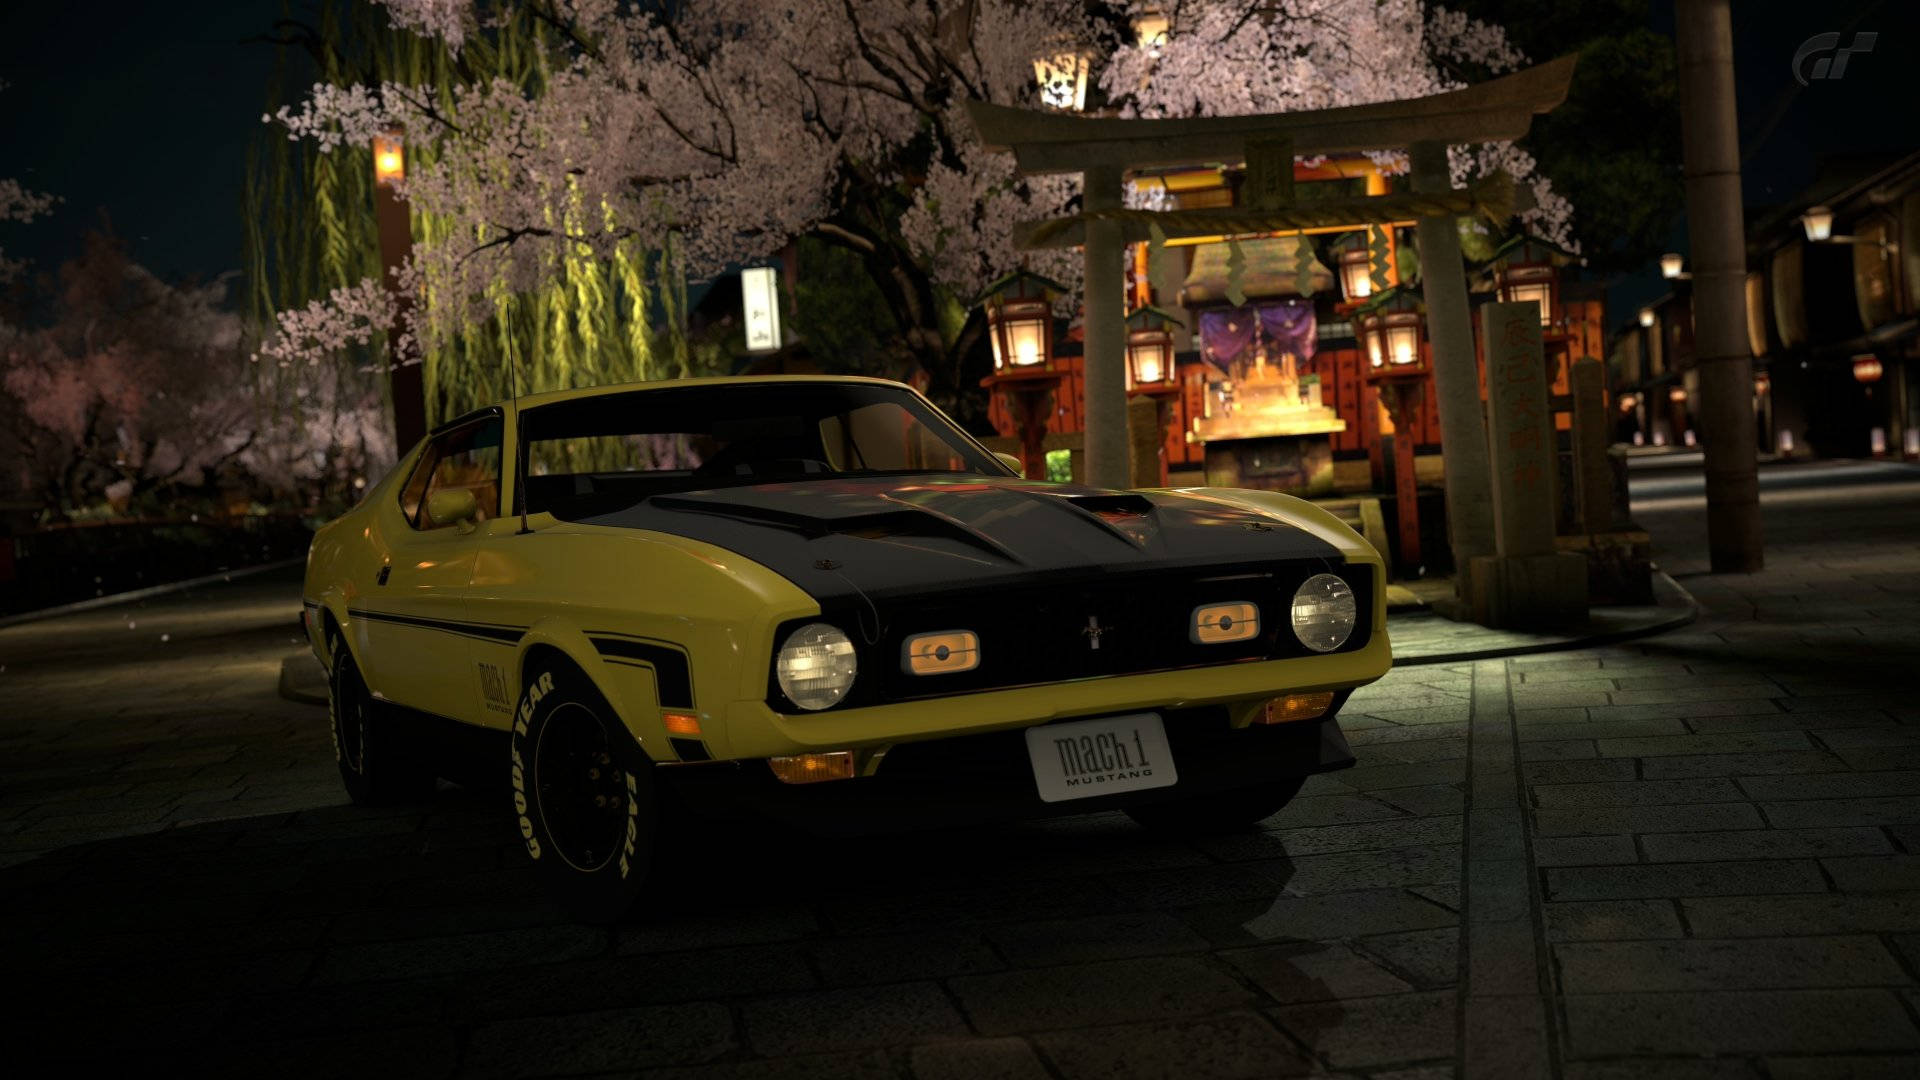 Hd Car In Cherry Blossom Temple